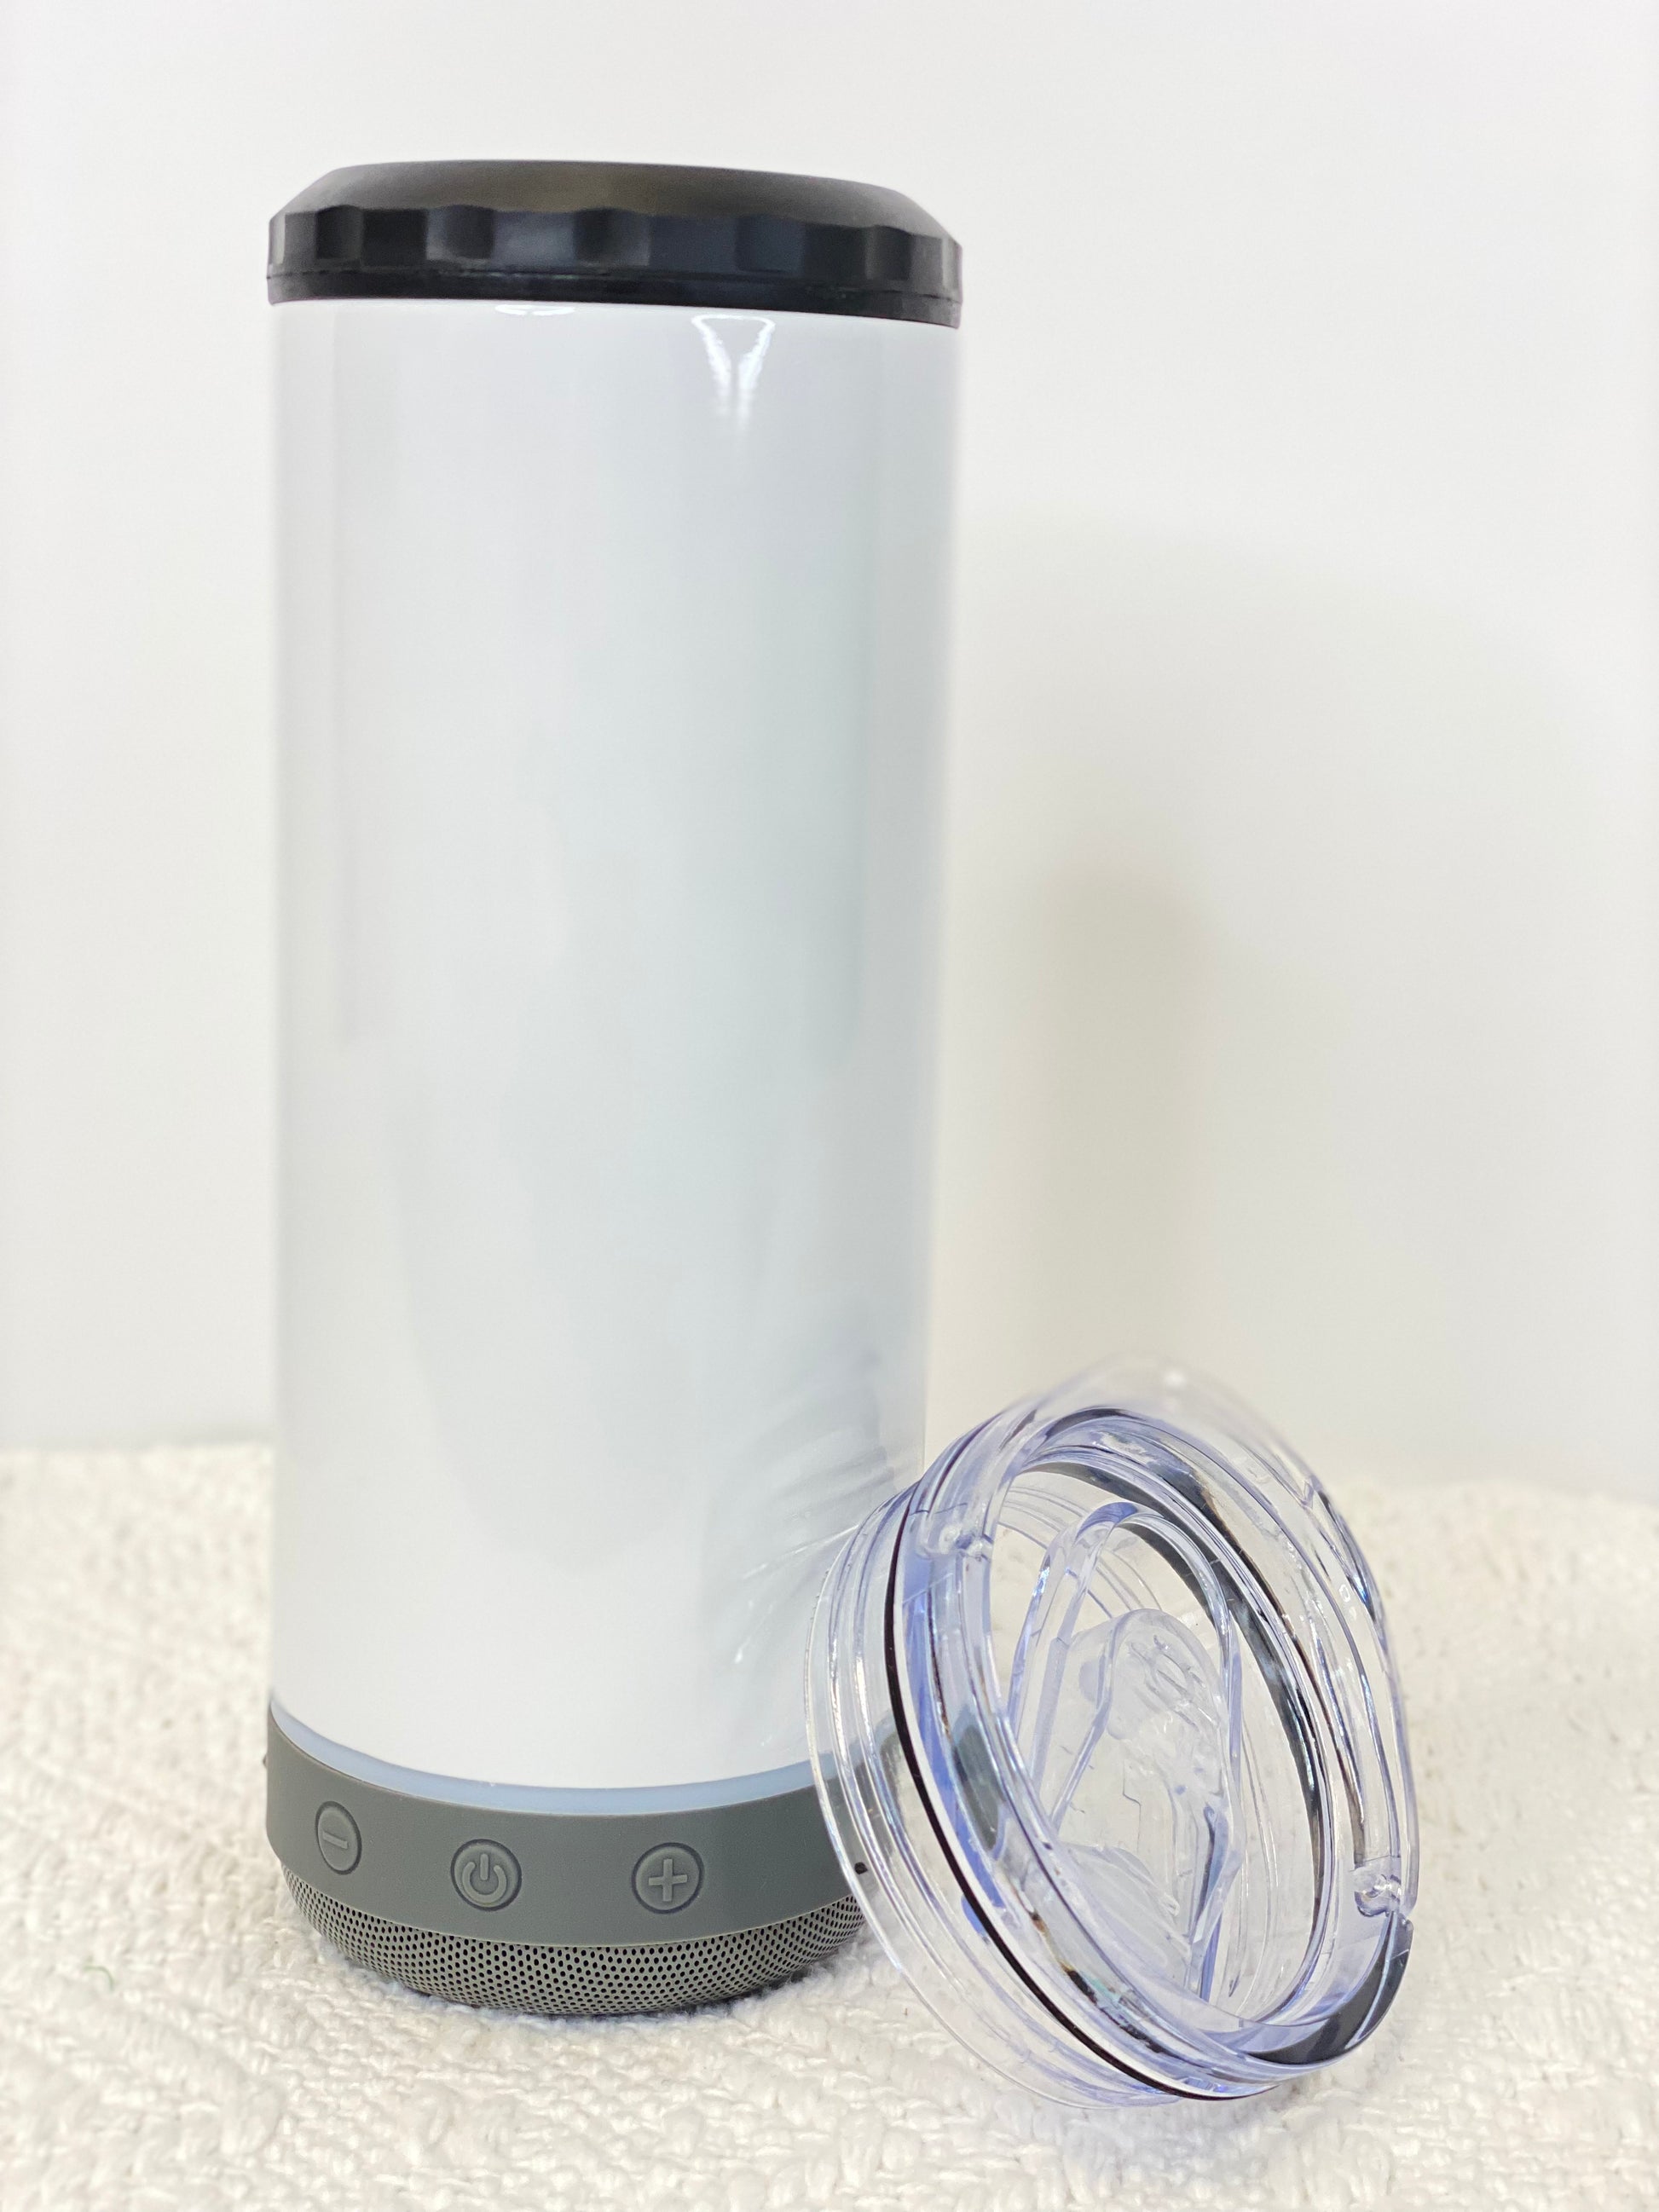 Speaker 4 in 1 Can Cooler Sublimation – Ava Jane's Blanks